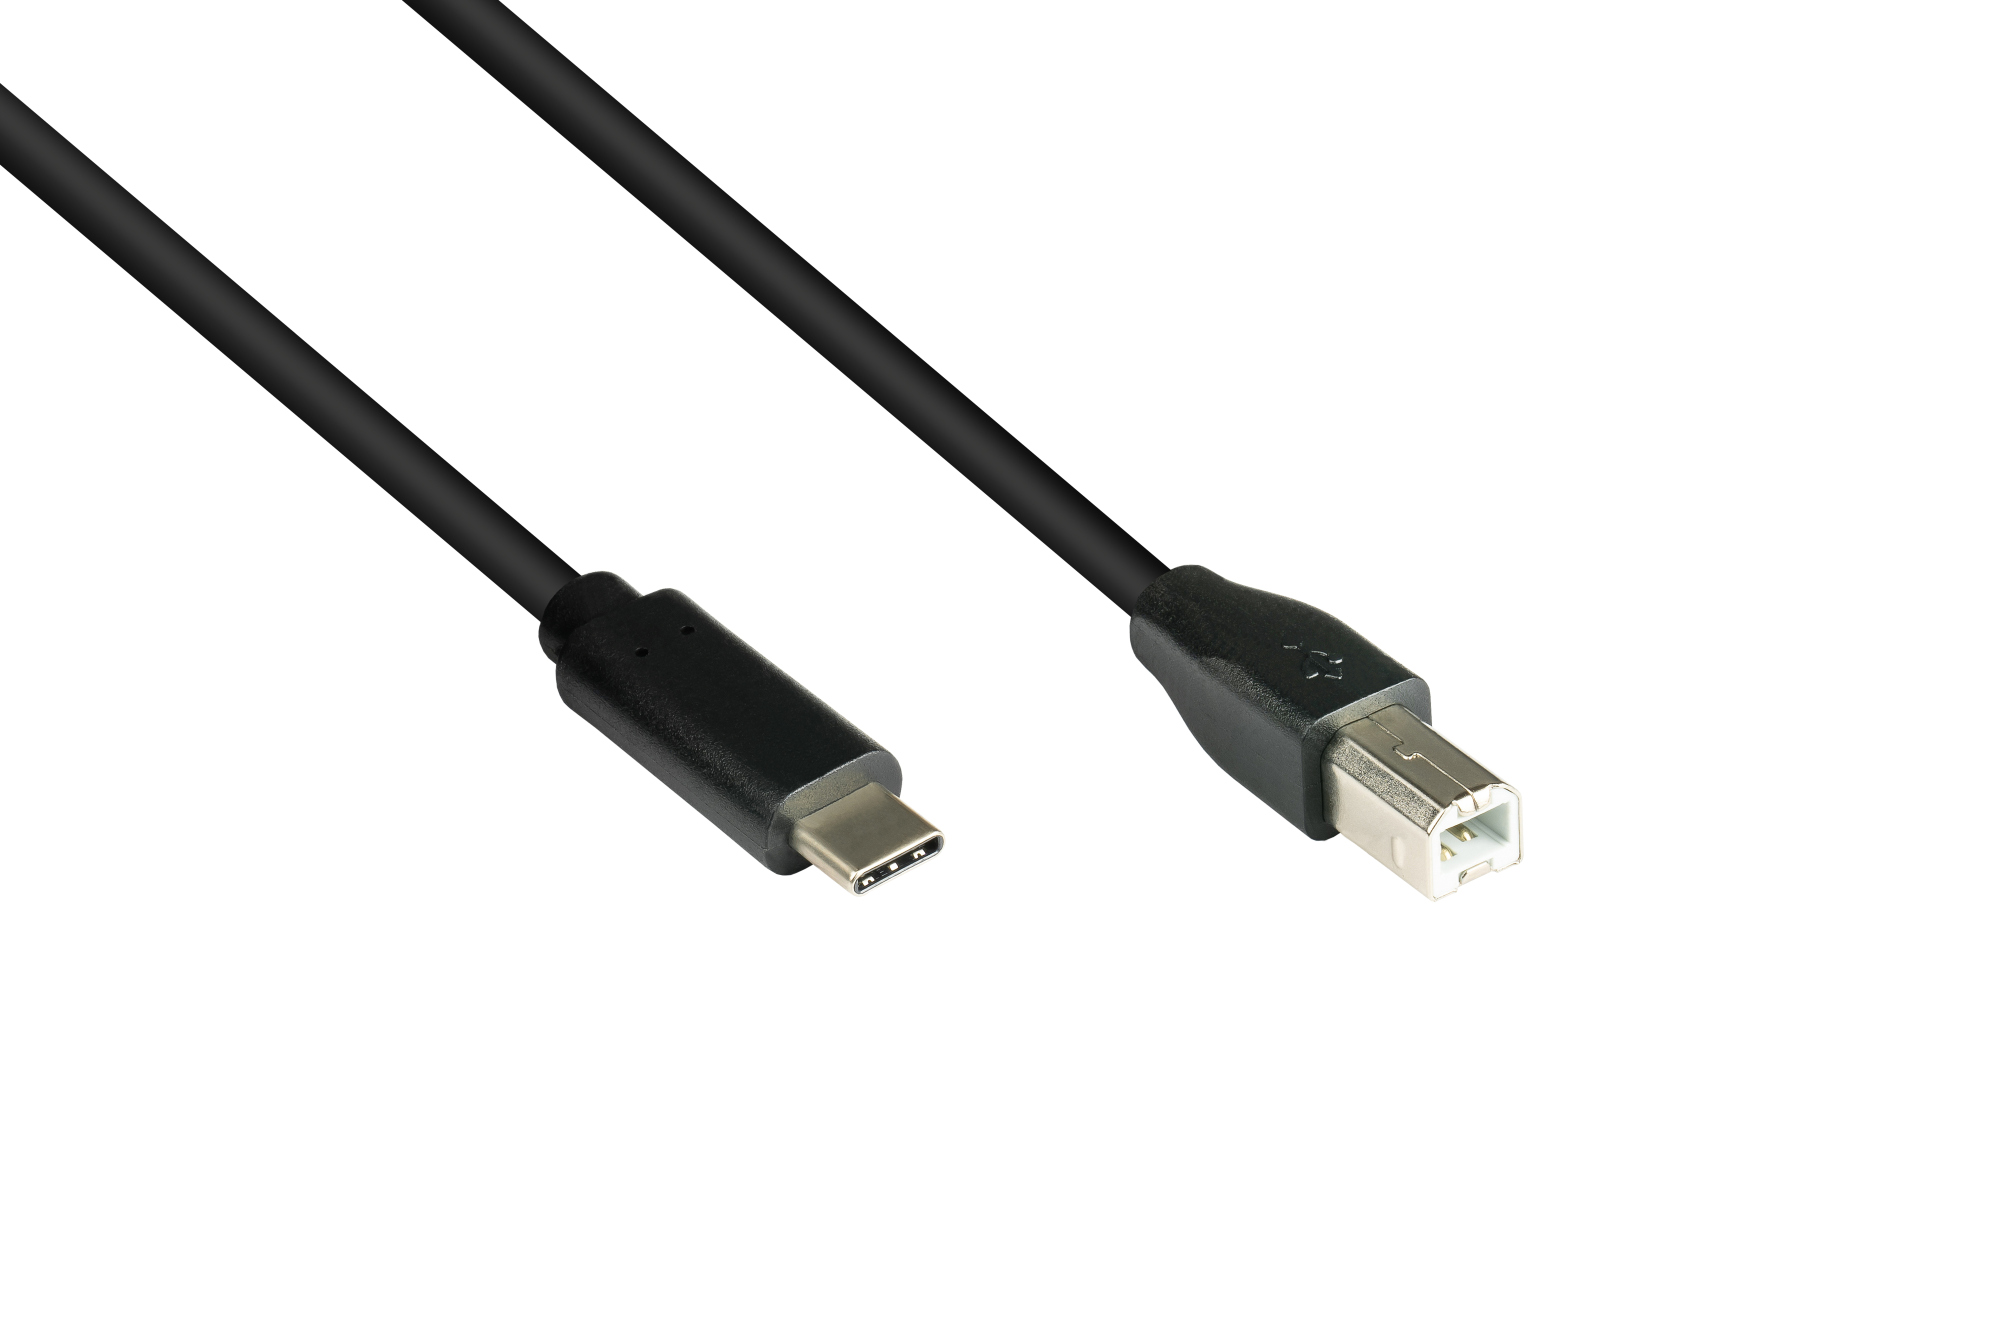 Anschlusskabel USB 2.0, USB-C™ Stecker an USB 2.0 B Stecker, CU, schwarz, 3m